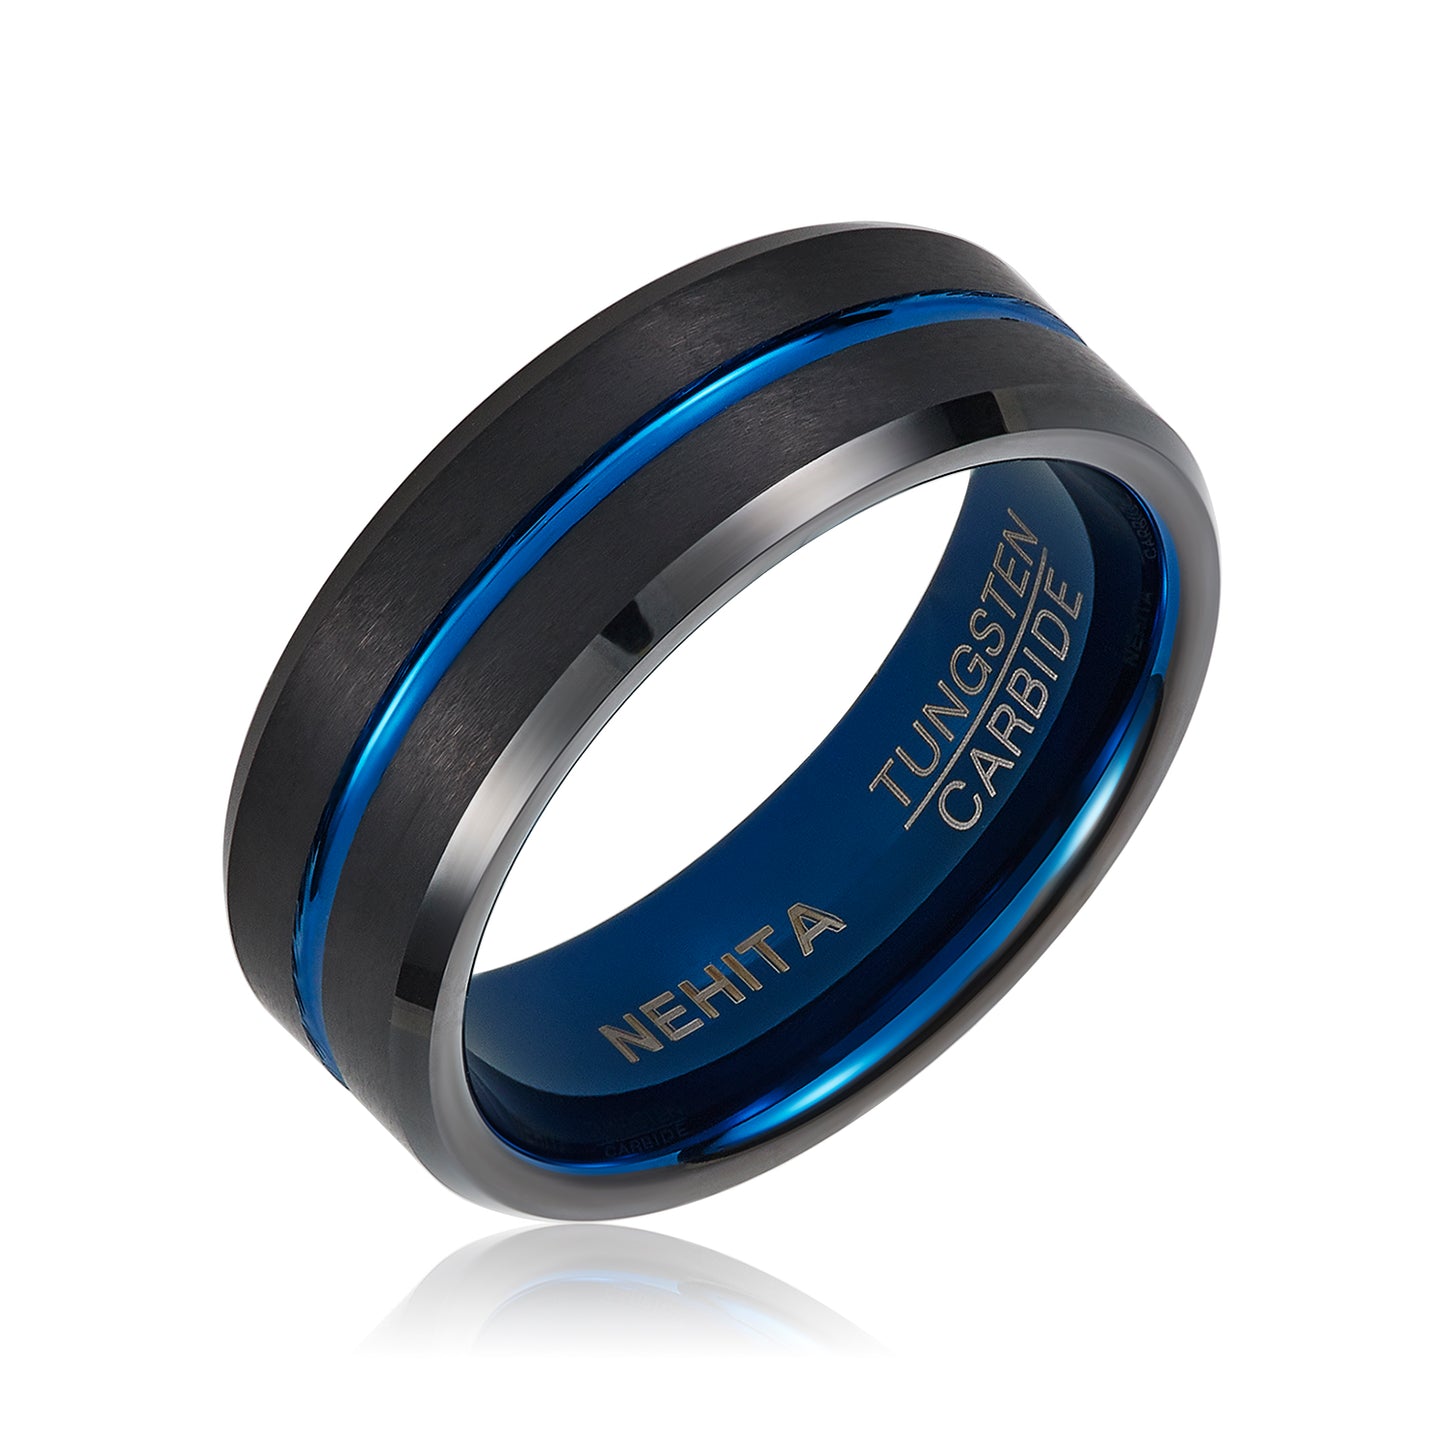 Nehita Black Tungsten Ring With Ion Plated Cobalt Blue Stripe